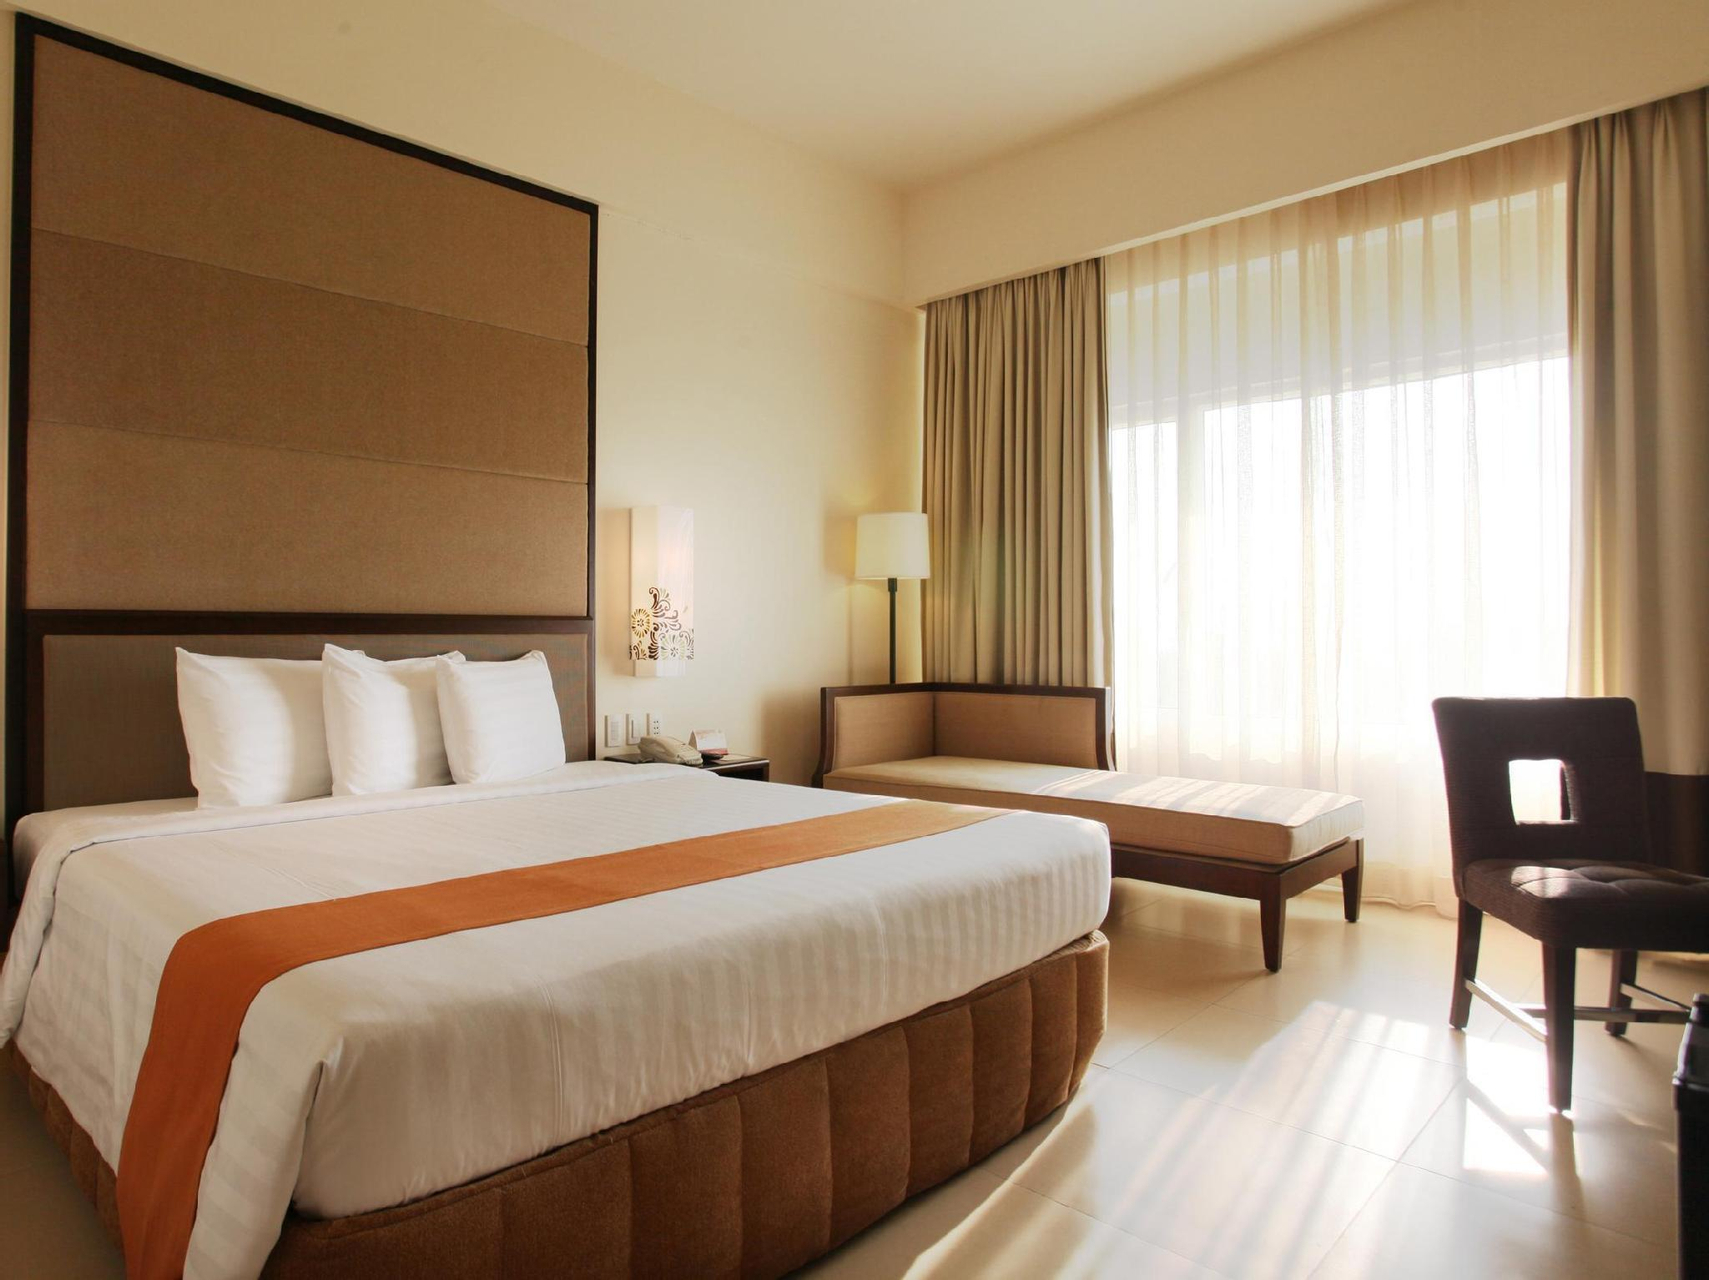 Bedroom 2, Taal Vista Hotel, Tagaytay City